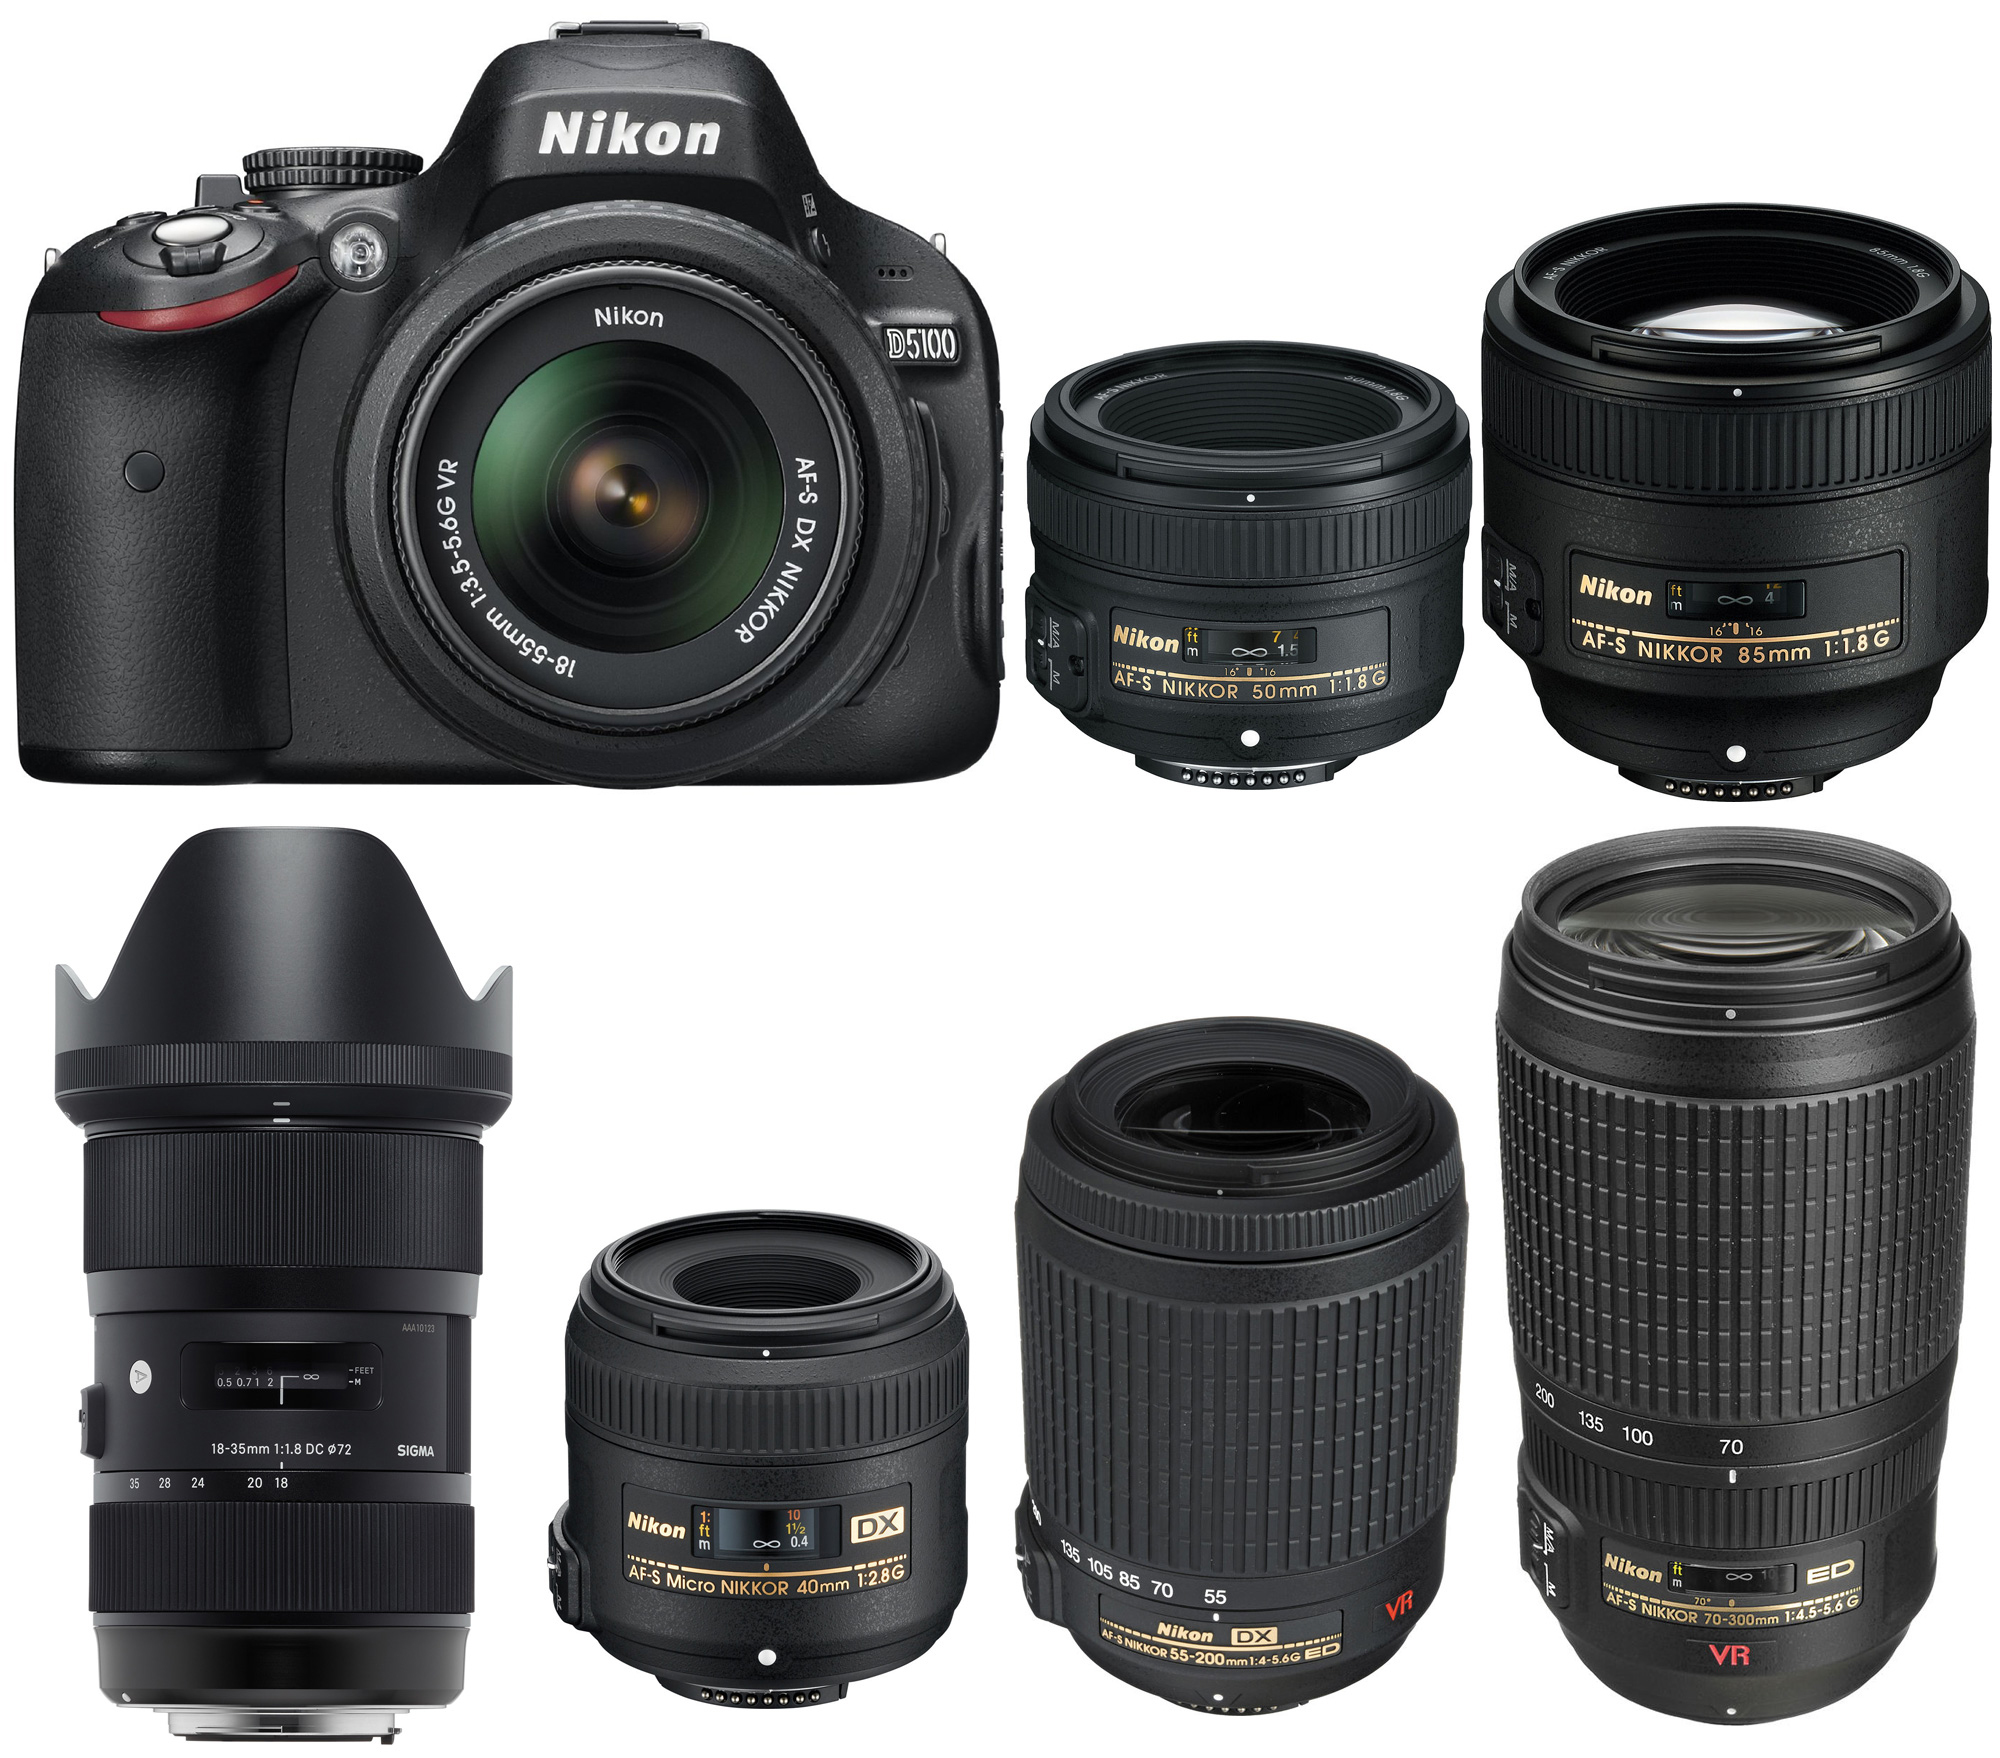 Overwegen Nauwkeurig Voor type Best Lenses for Nikon D5100 - Camera News at Cameraegg